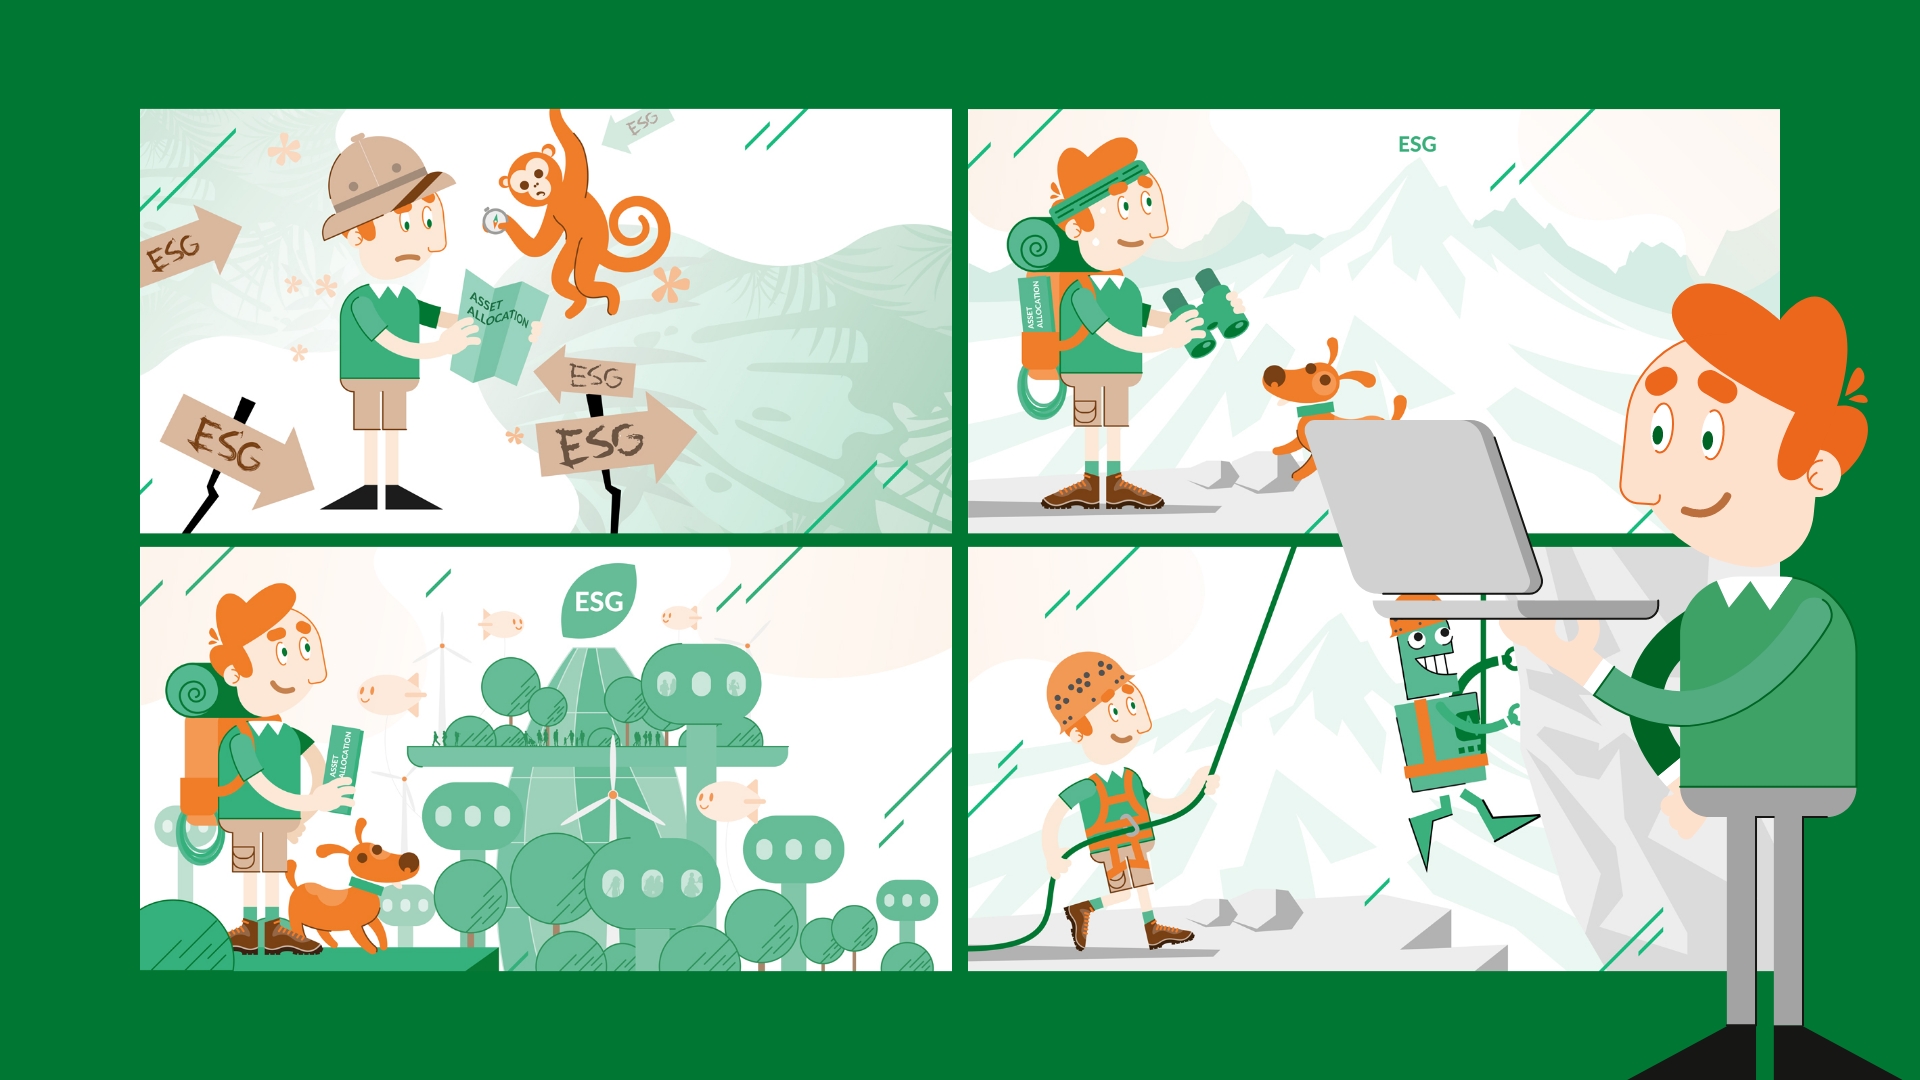 twin werbeagentur Agenturleistung Animation & Illustration | Comics & Doodels Collage